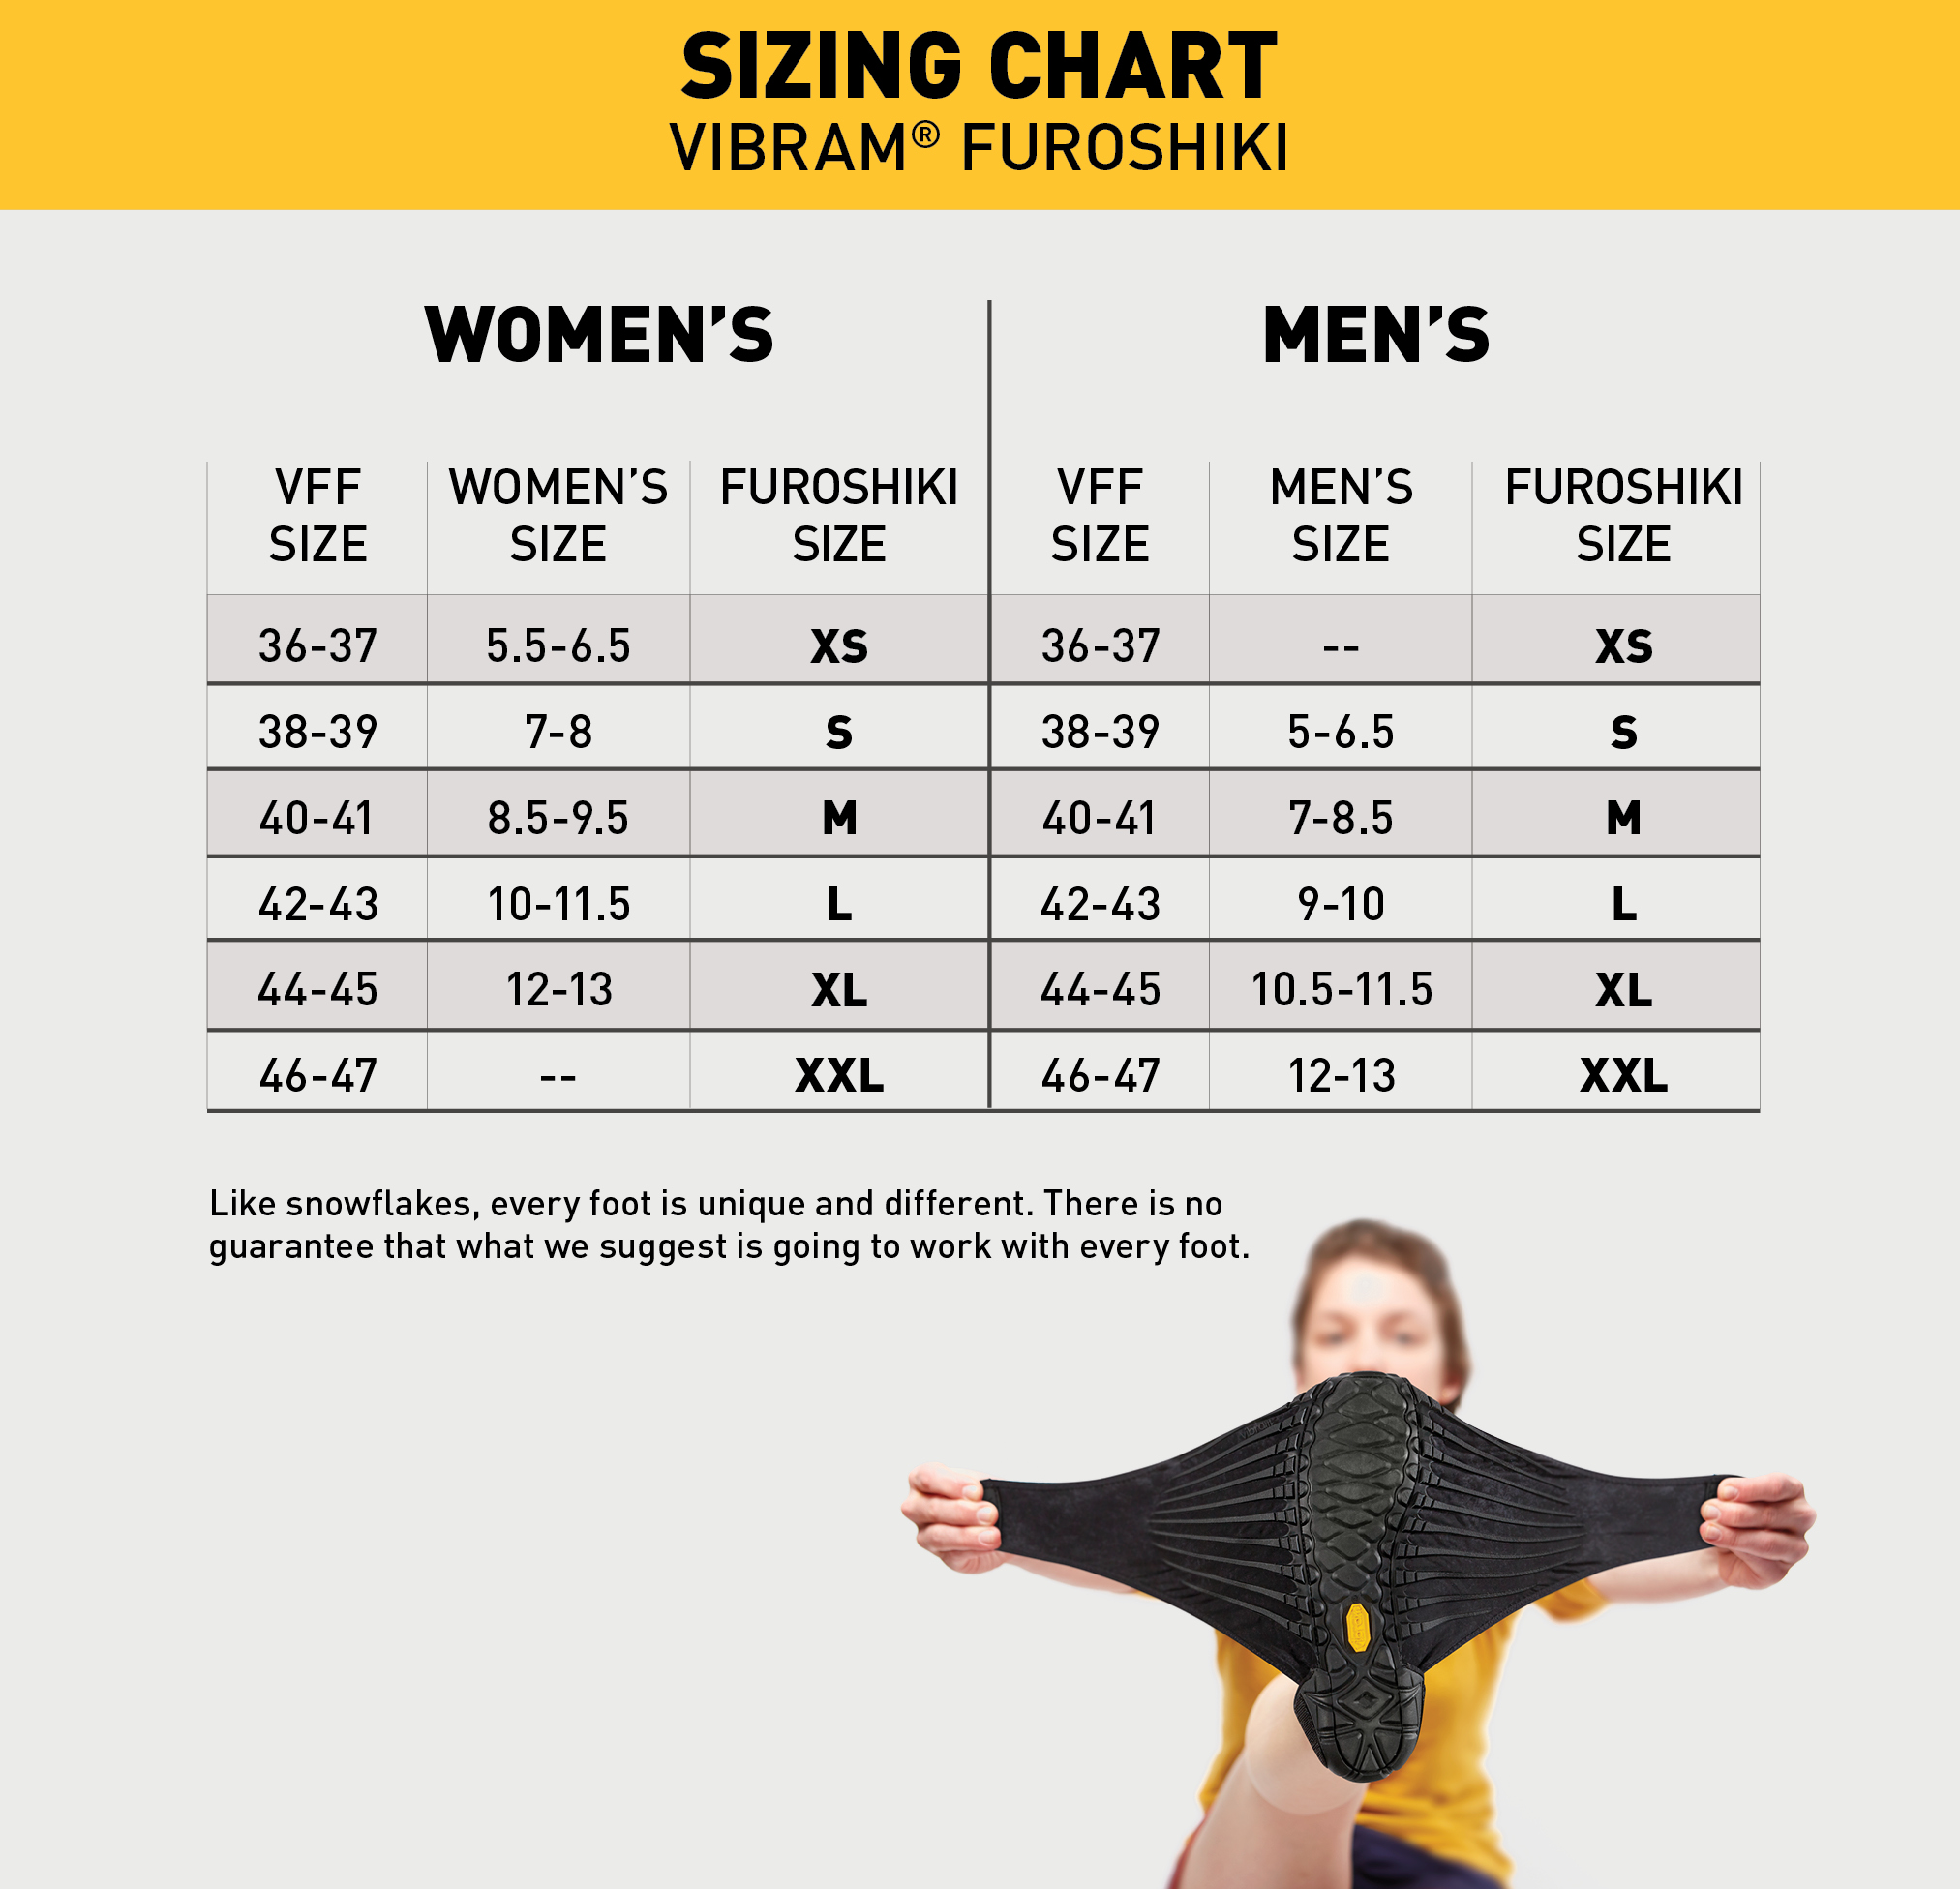 Vibram Size Chart Men